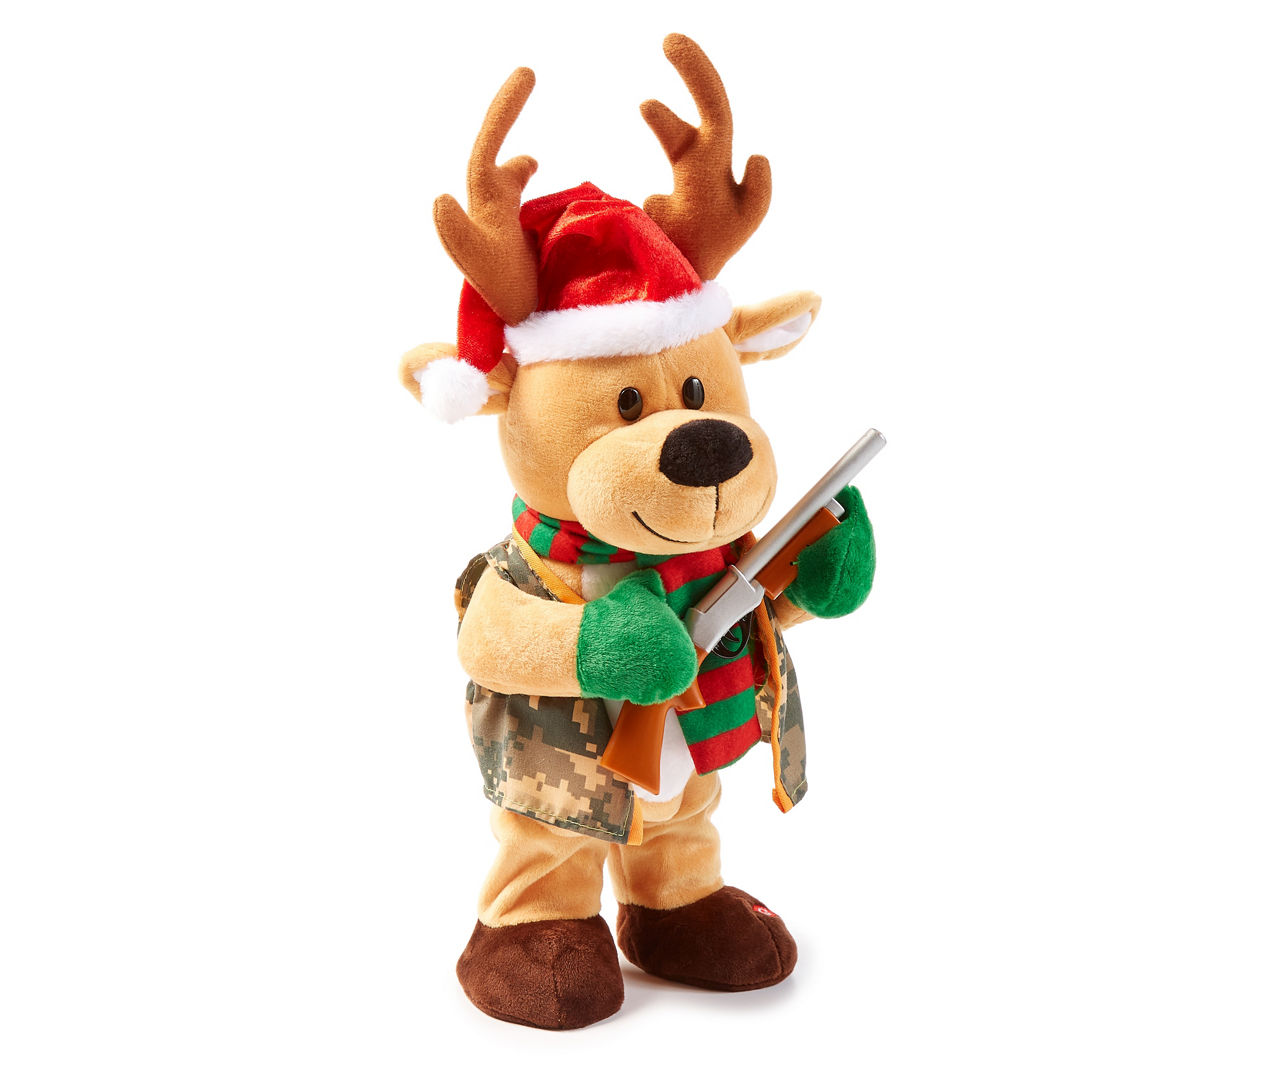  Reindeer Wieners Candy Wax Sticks- Funny Christmas